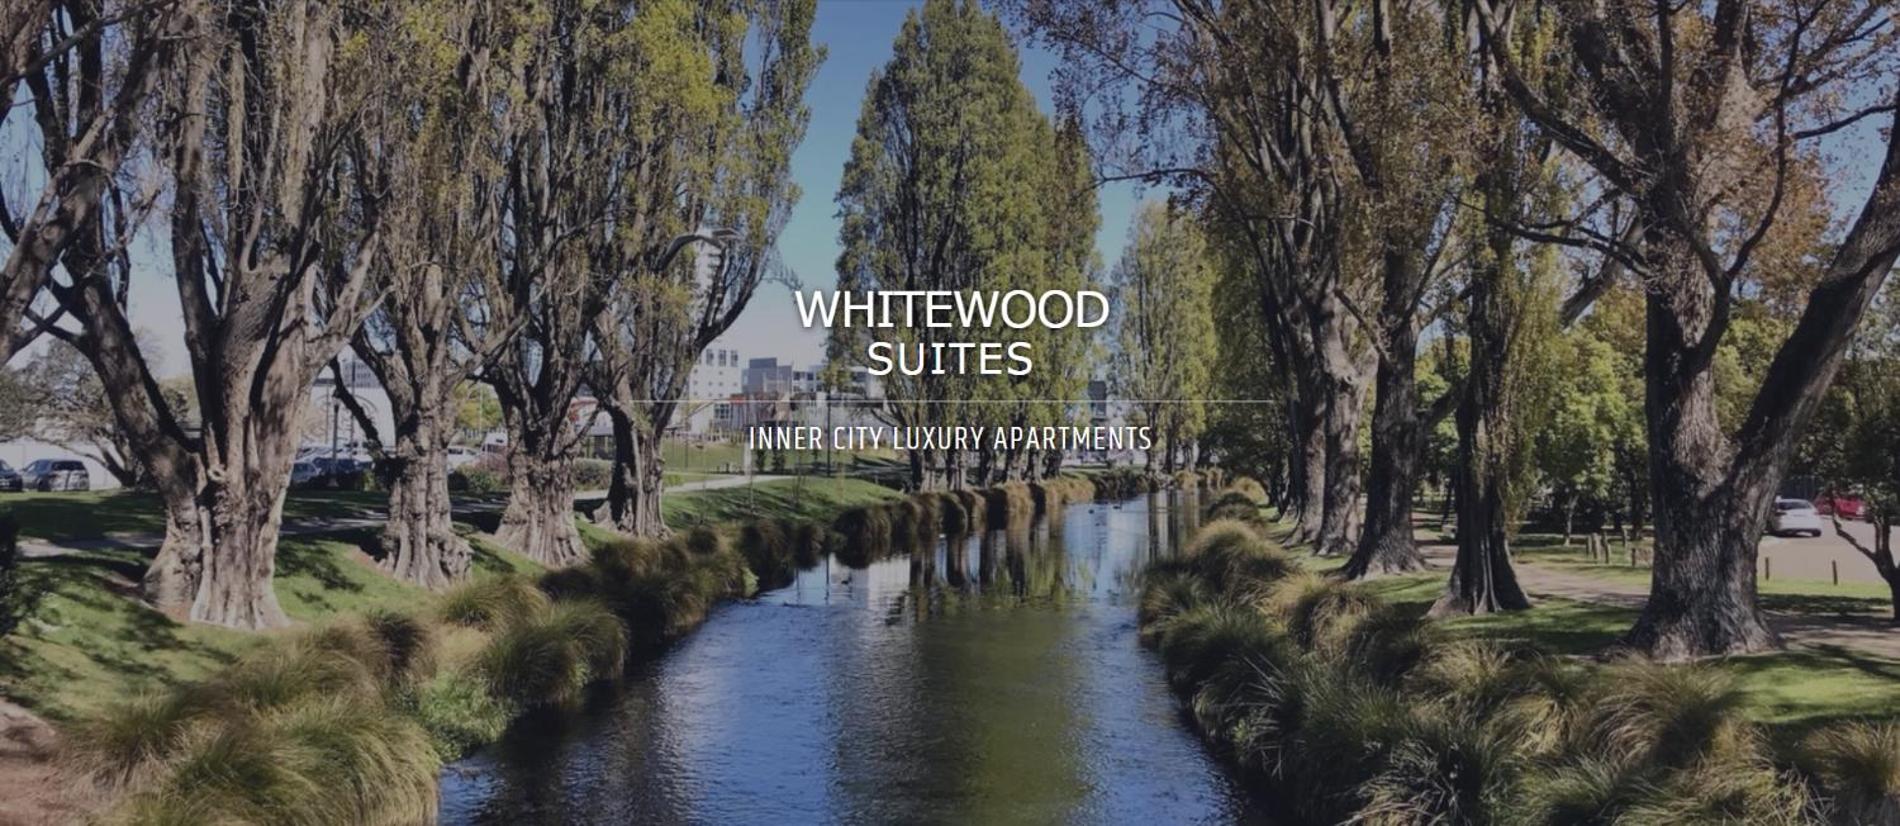 Whitewood Suites Inner City Luxury Apartments